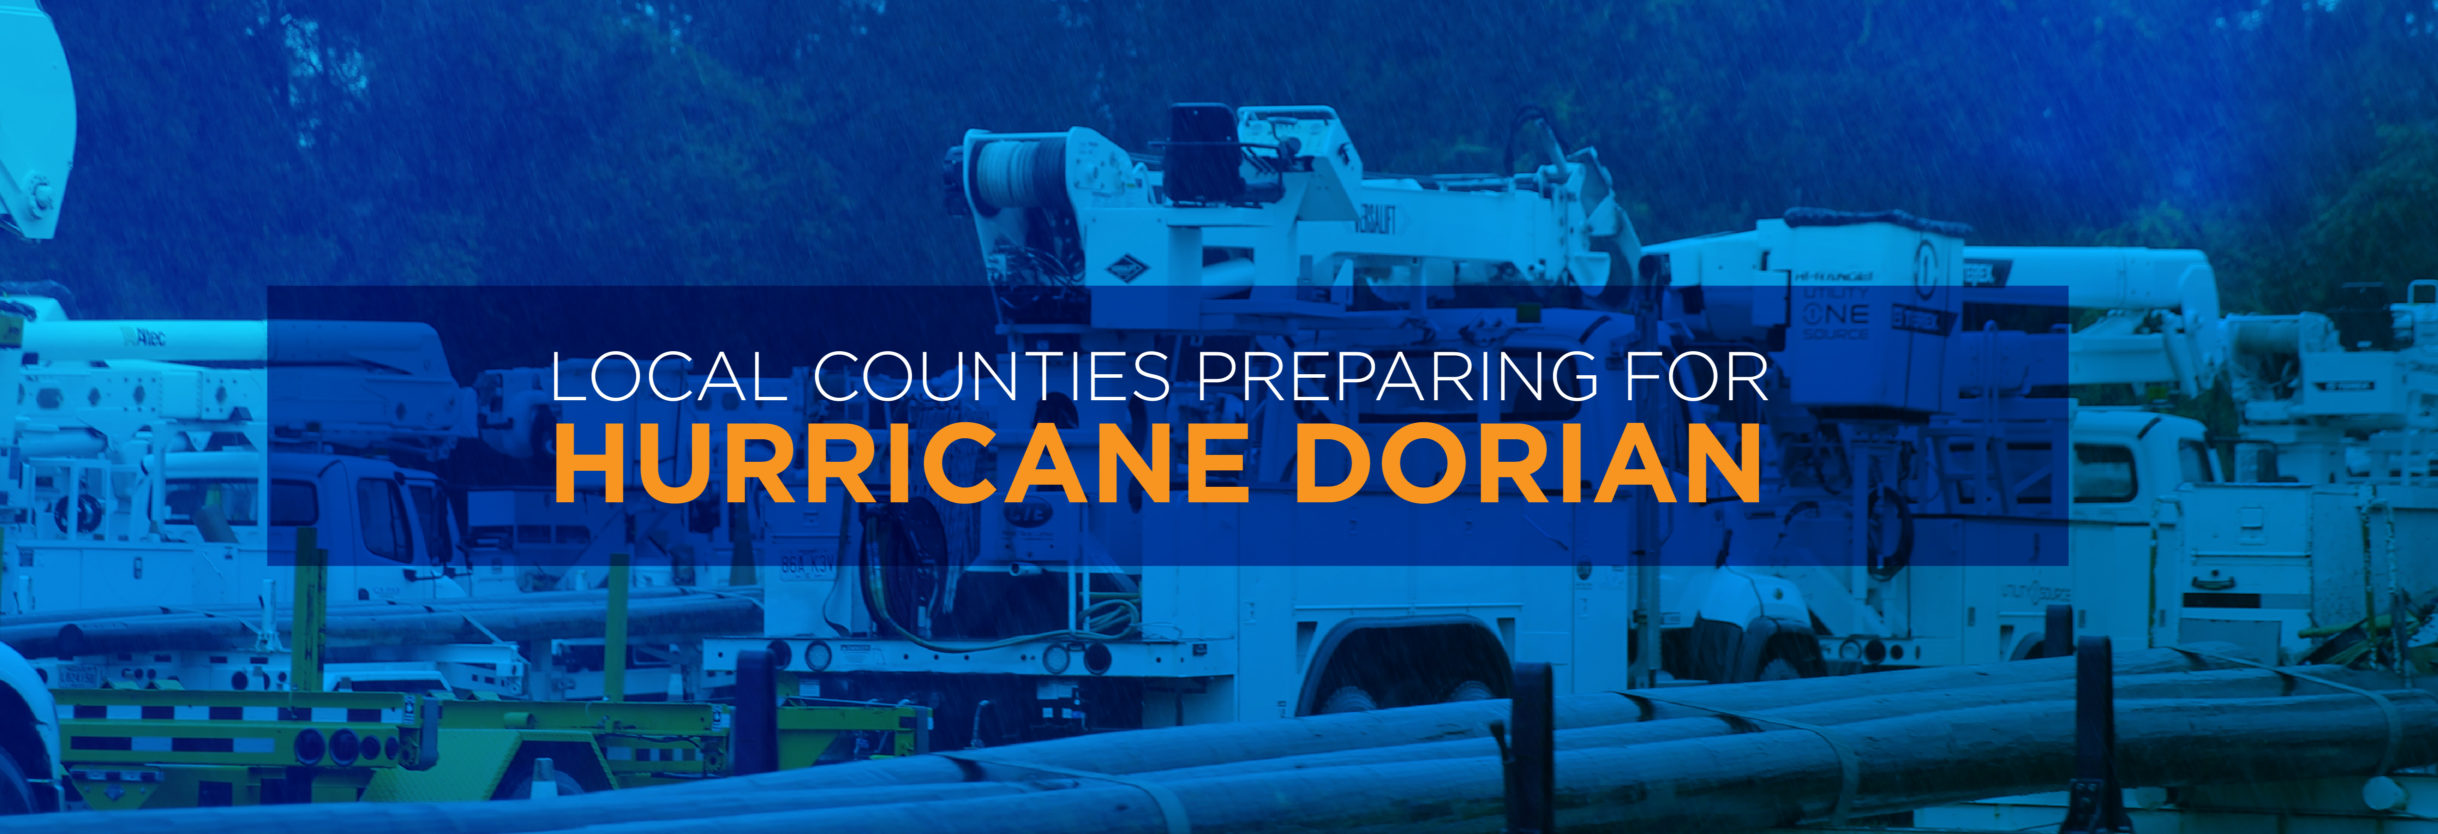 Local Counties Preparing for Hurricane Dorian